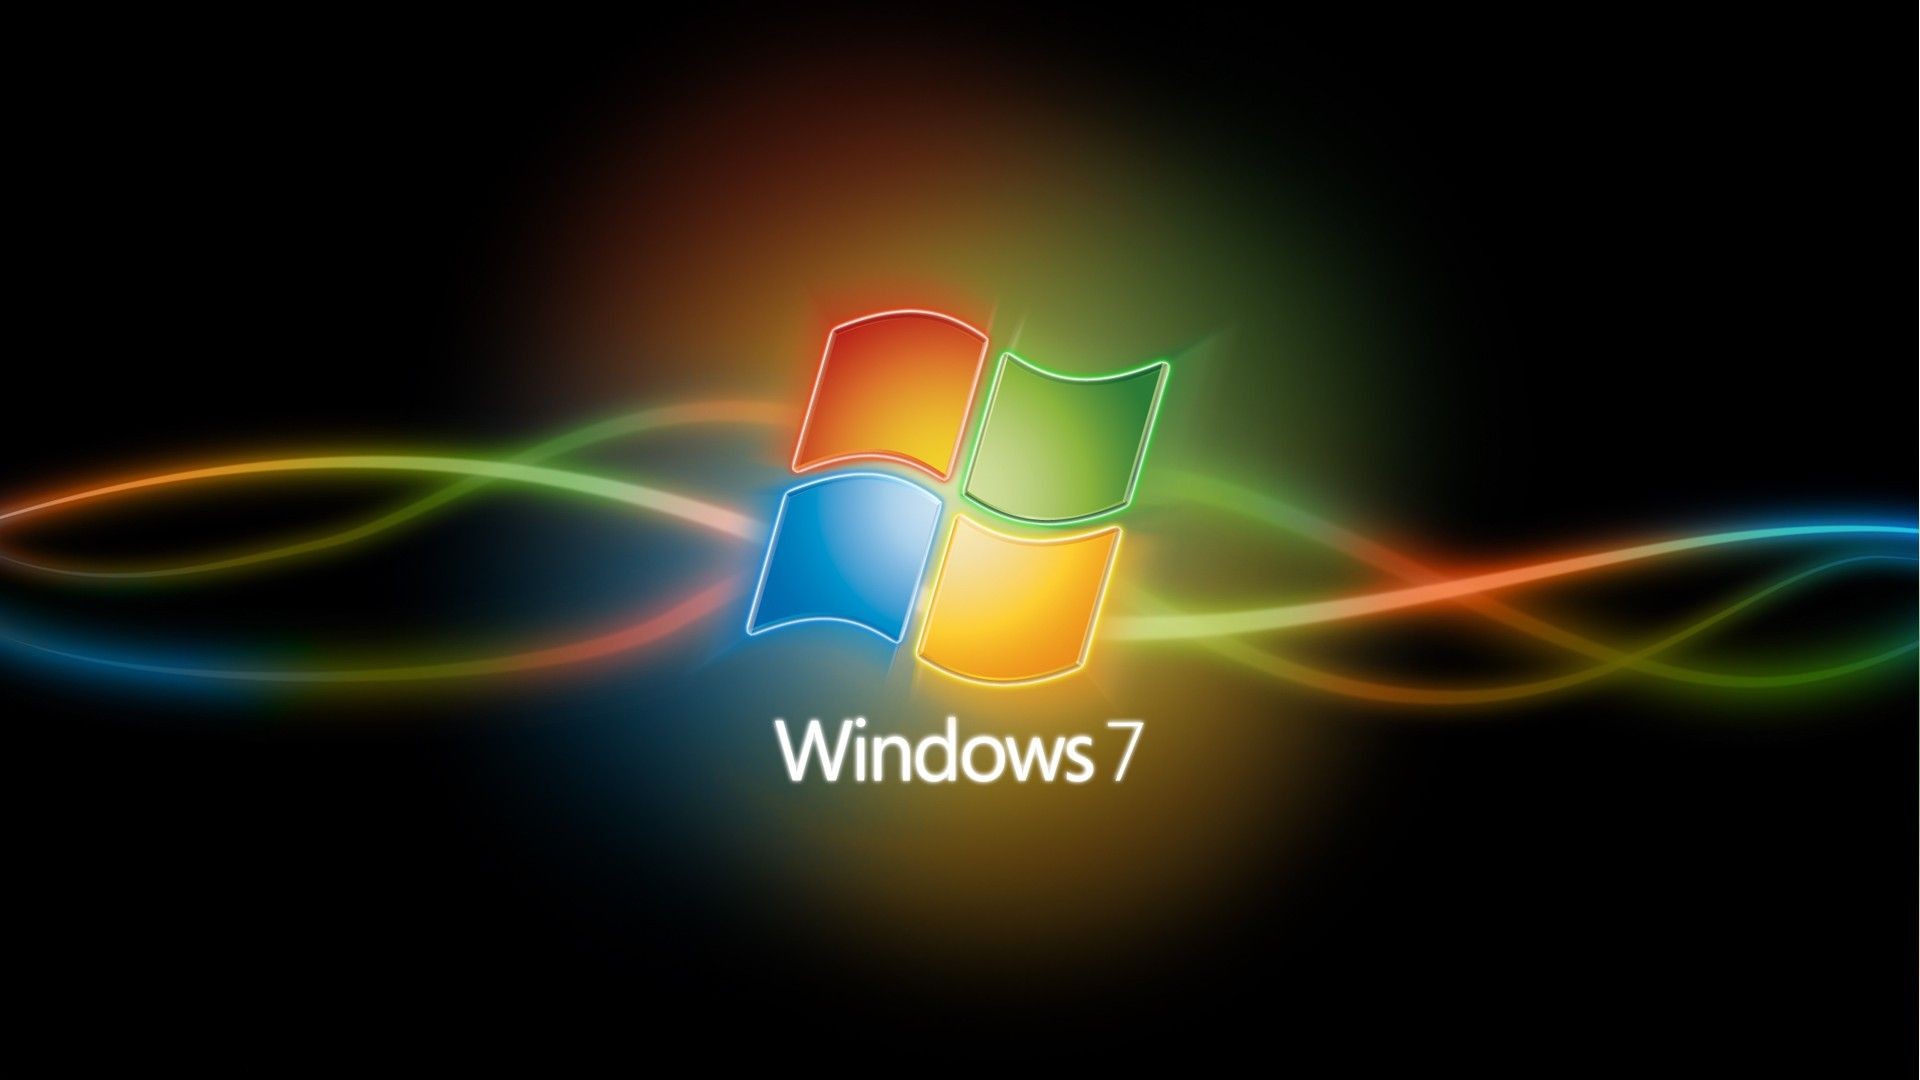 Windows 7 Animated GIF Wallpaper (56 Wallpapers)